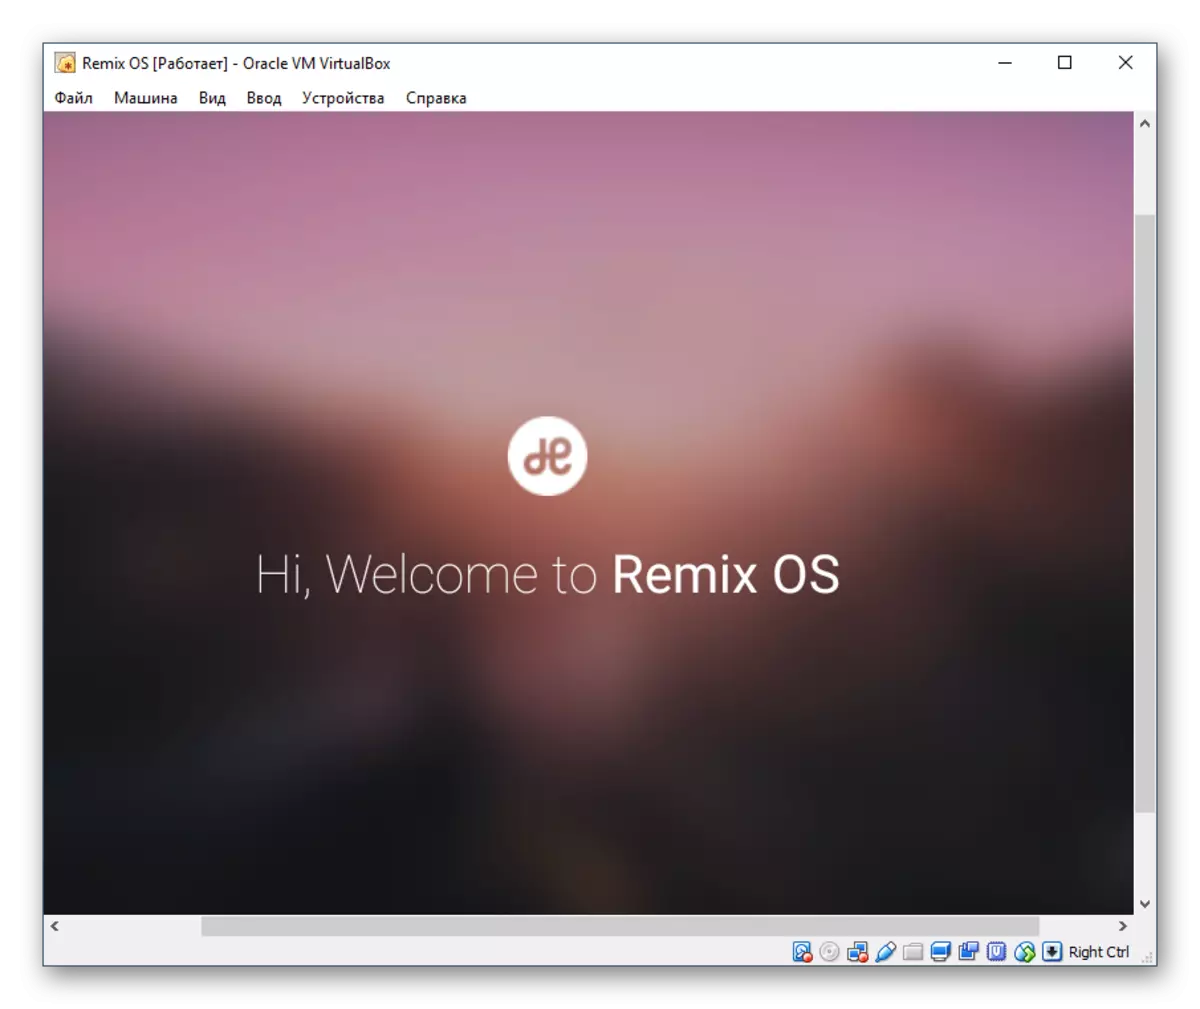 Beannacht REMIX OS i VirtualBox